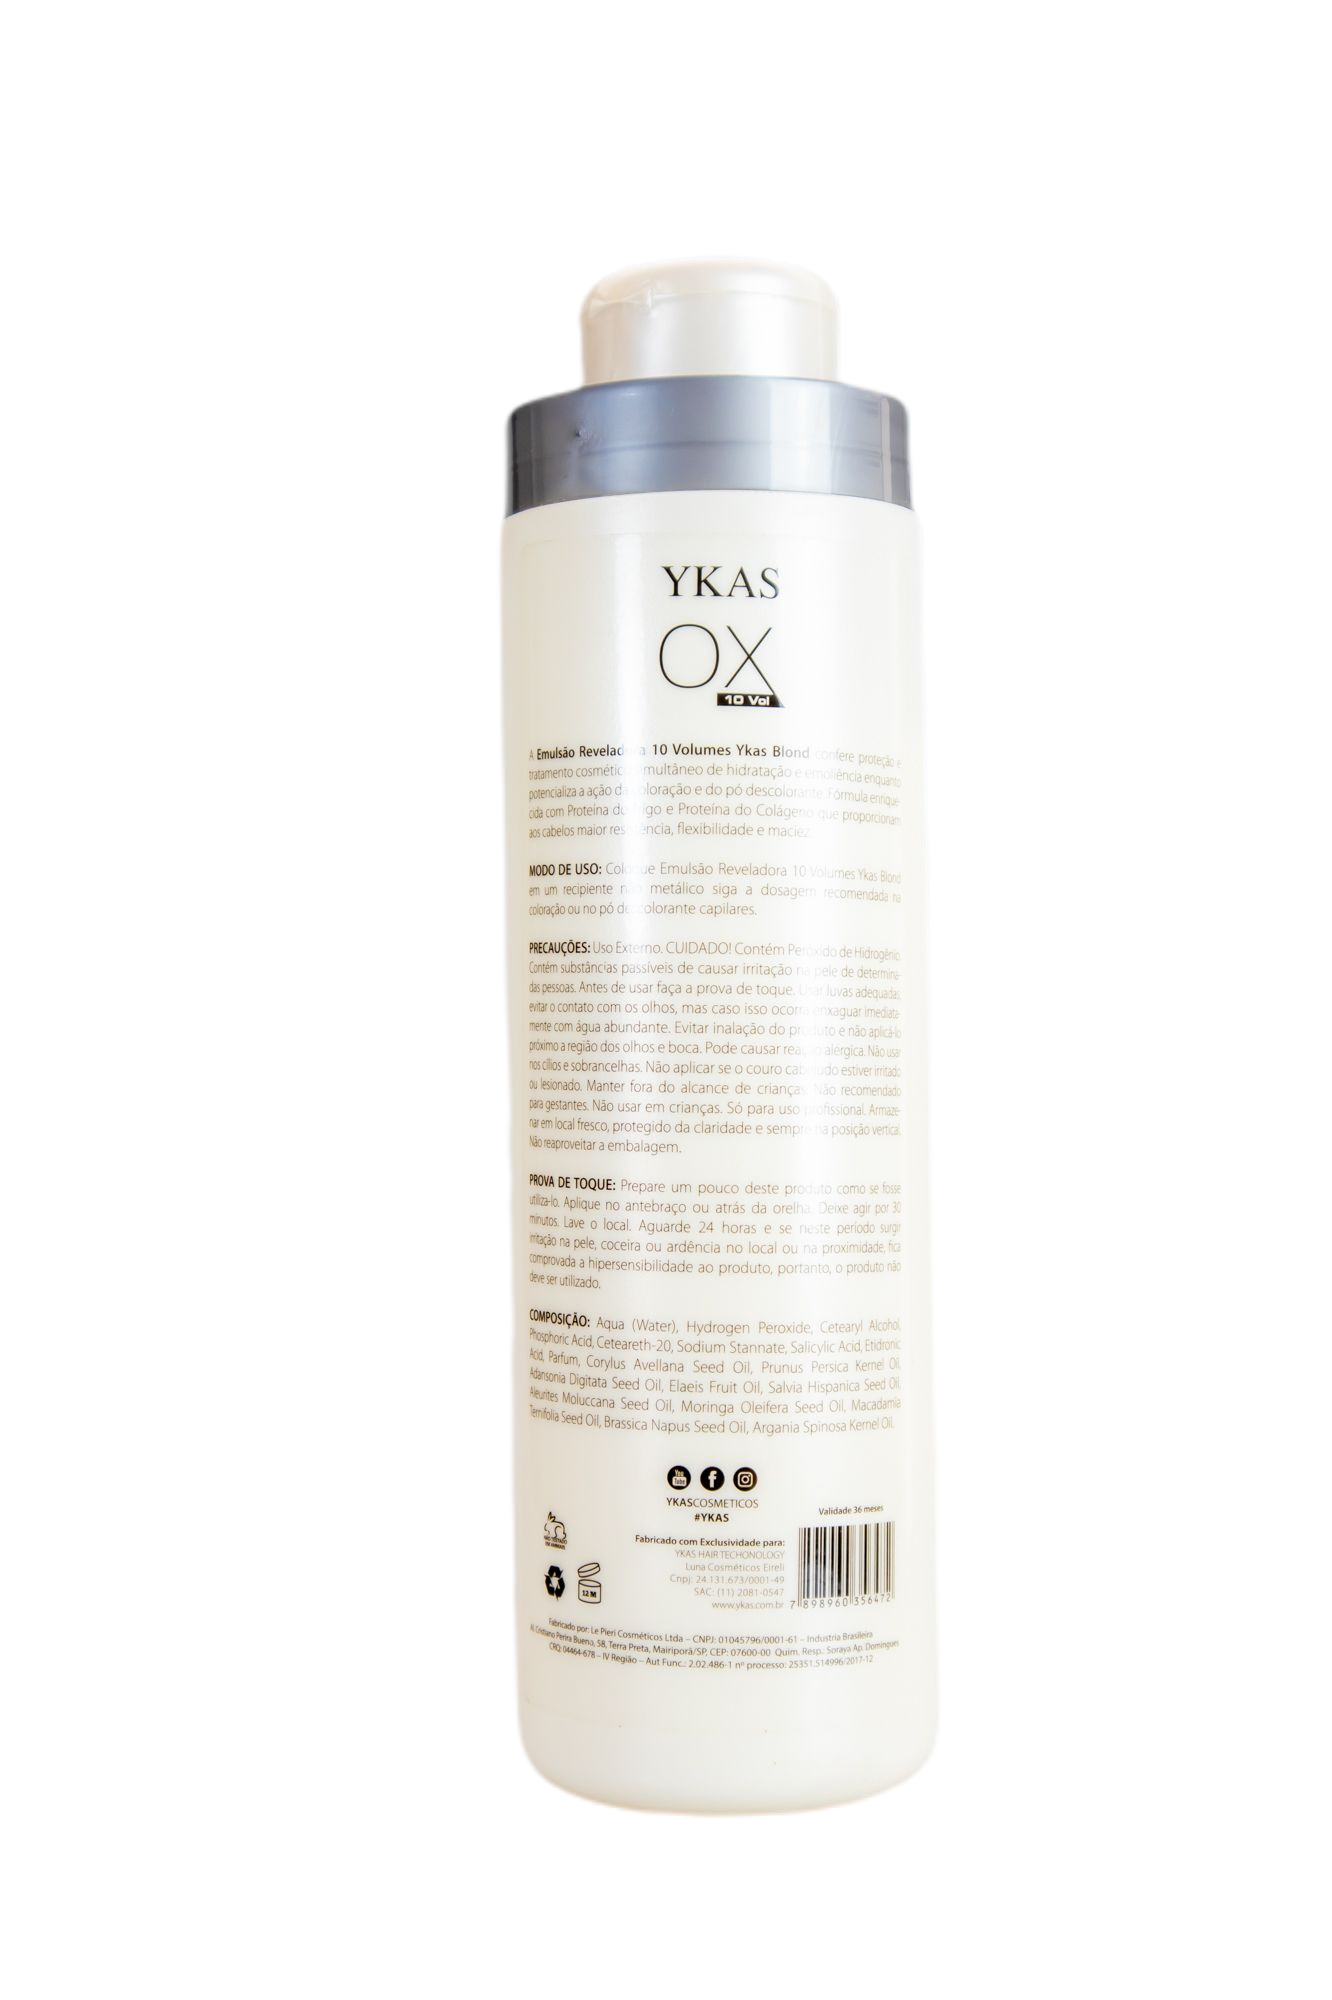 Ykas Brazilian Hair Treatment Professional Blond Oxidizing Emulsion Hair Treatment OX 10 900ml 3% - Ykas